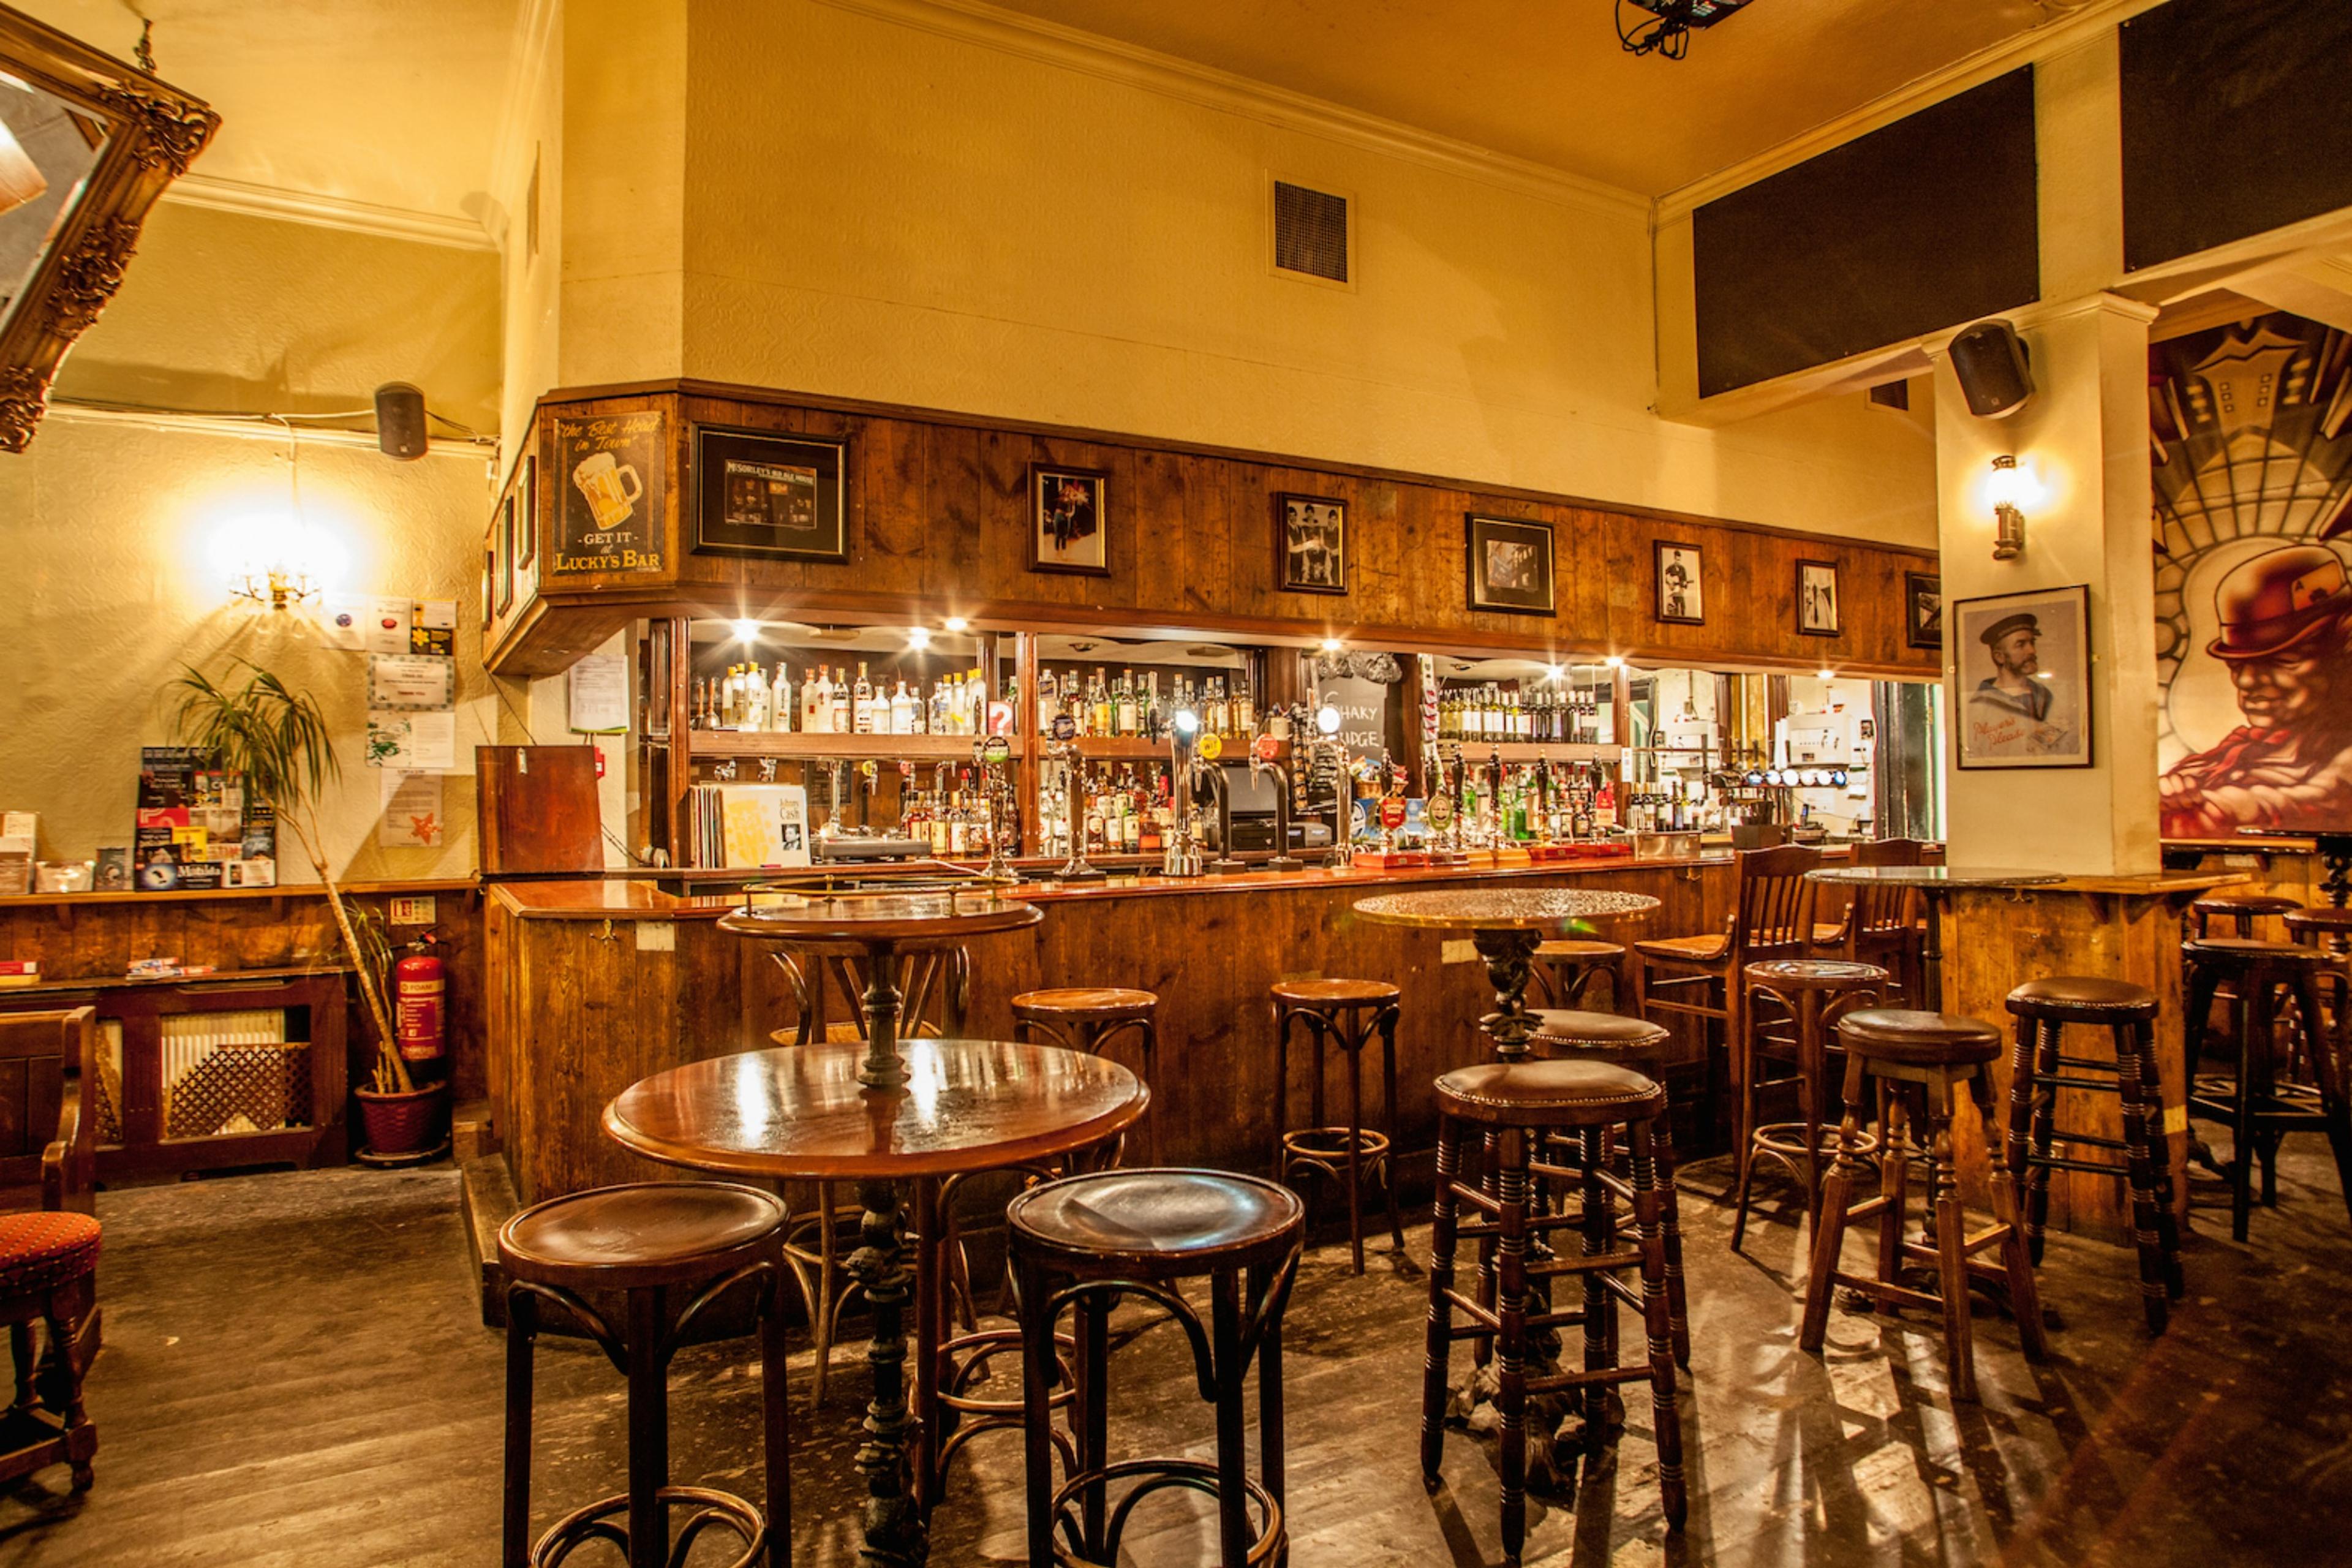 The Woodbine - Irish Pub